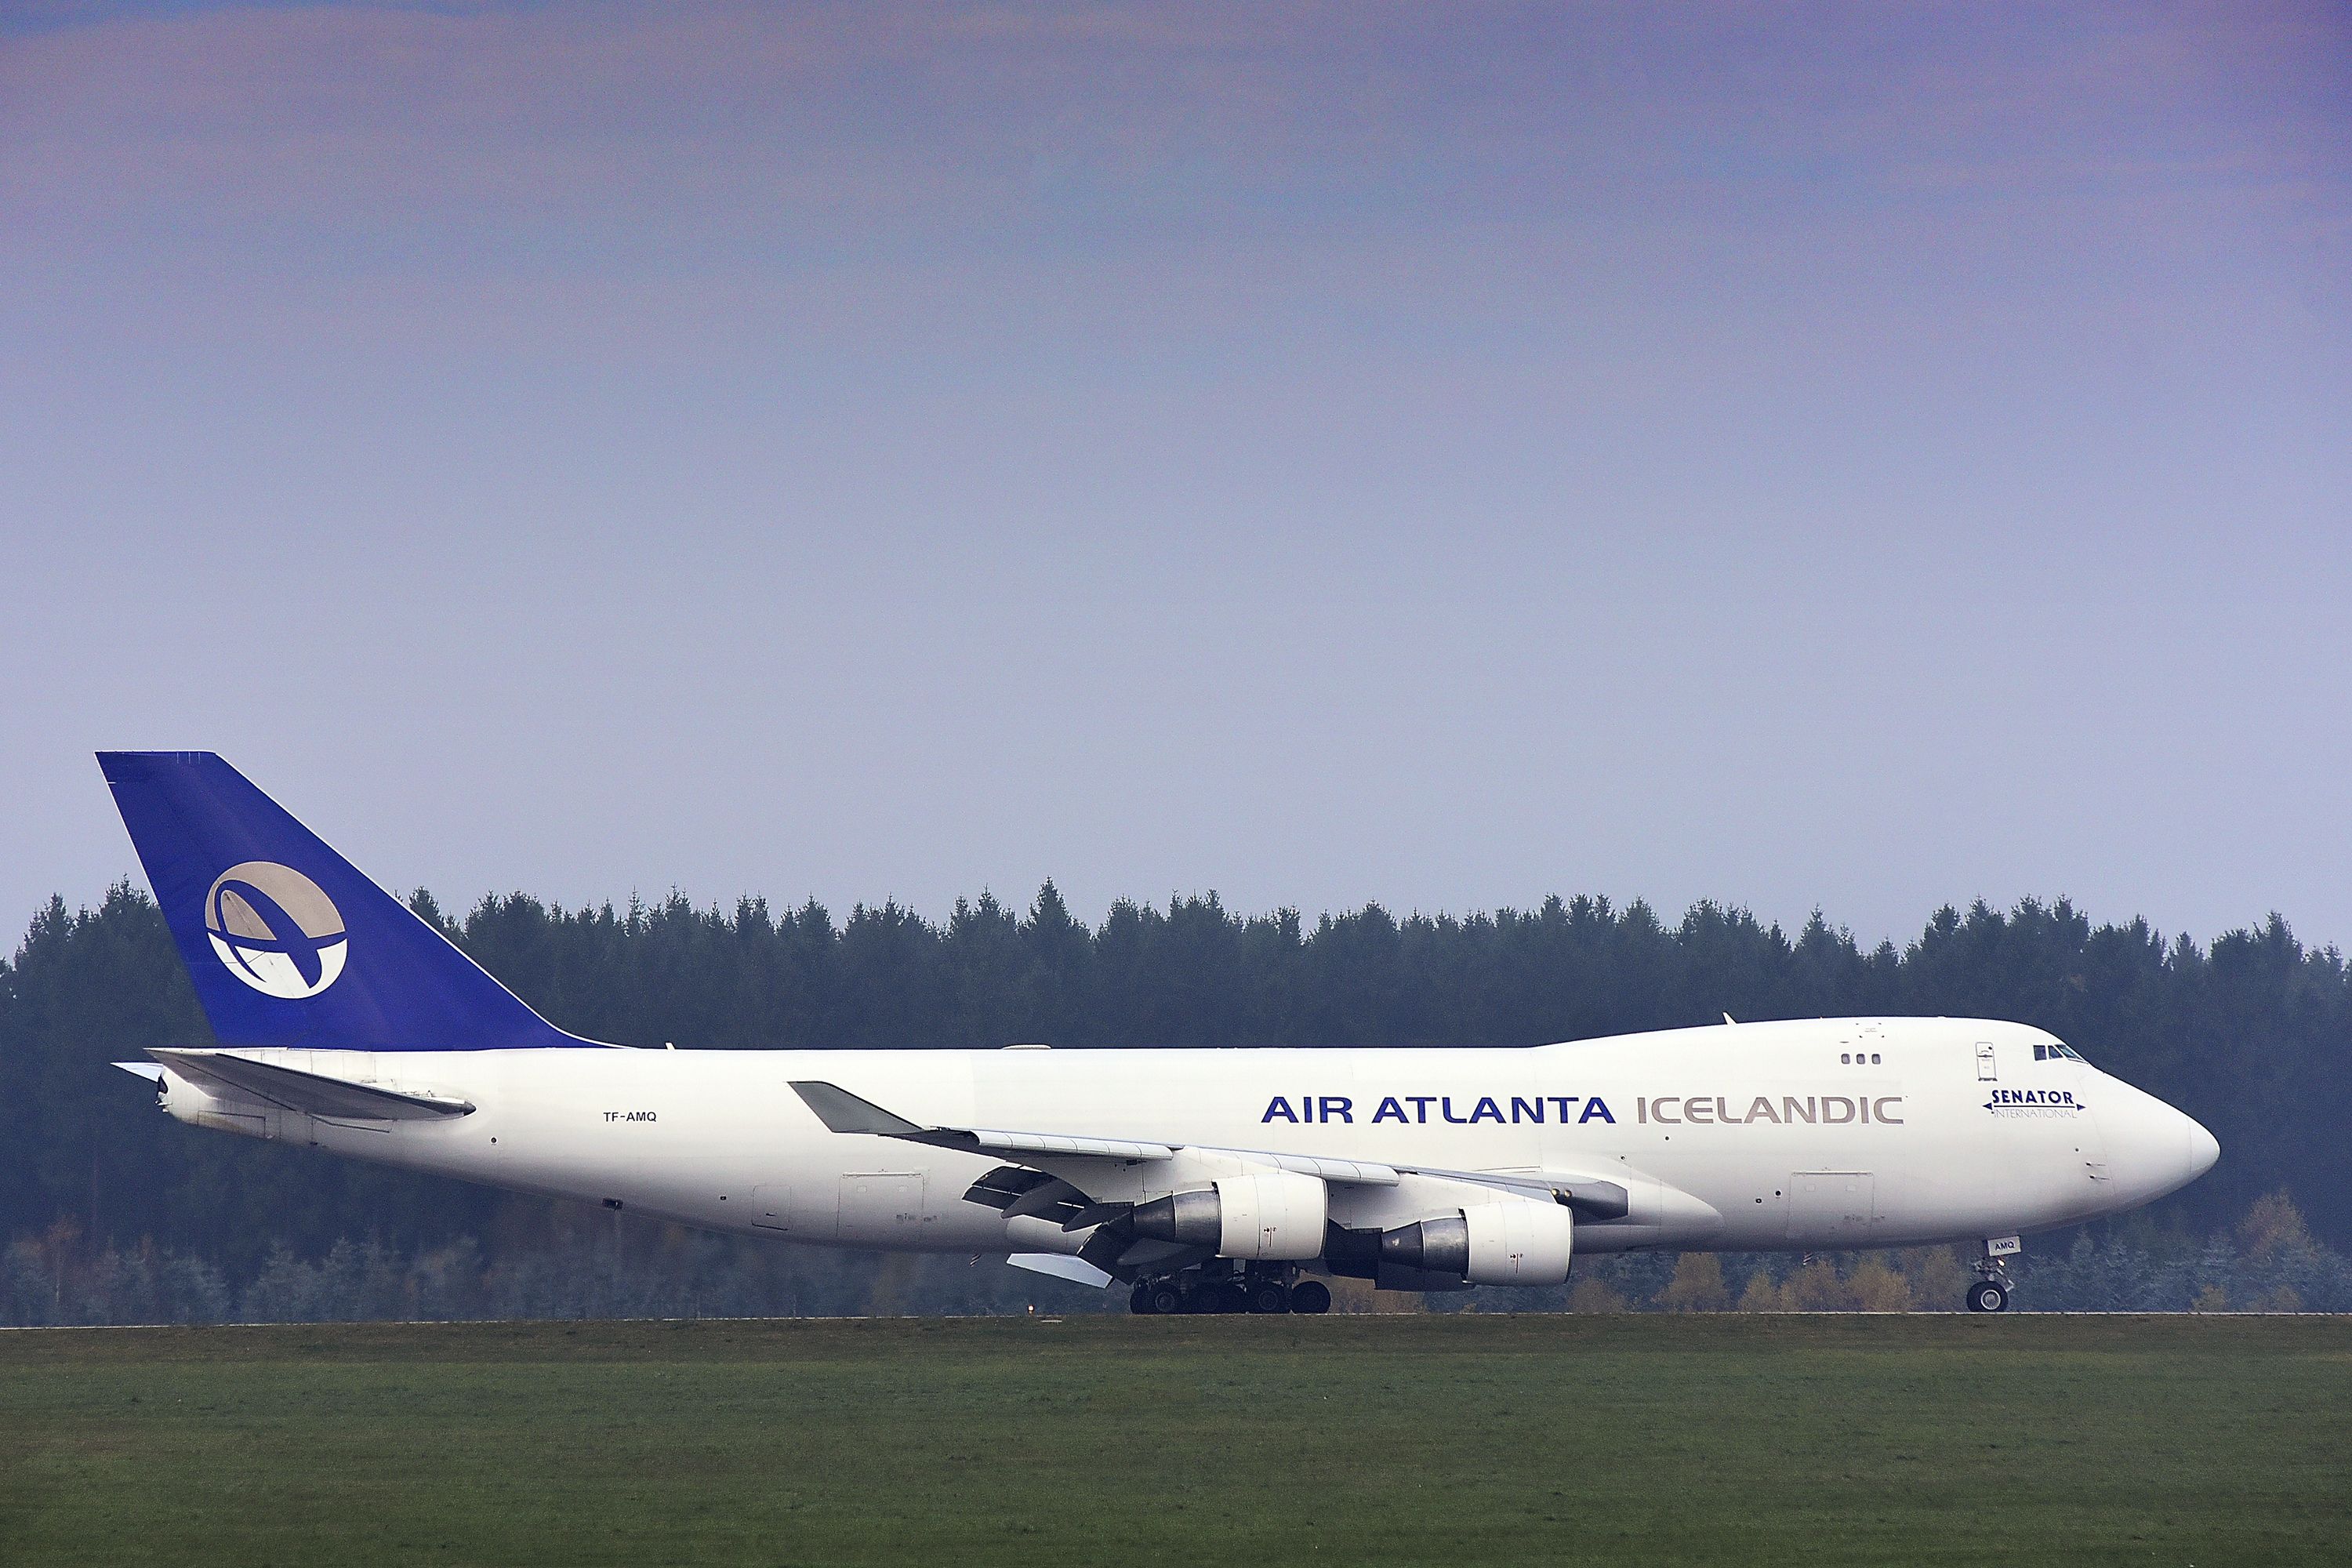 Air Atlanta Icelandic Boeing 747-400F at Frankfurt Hahn Airport HHN shutterstock_762828559-1